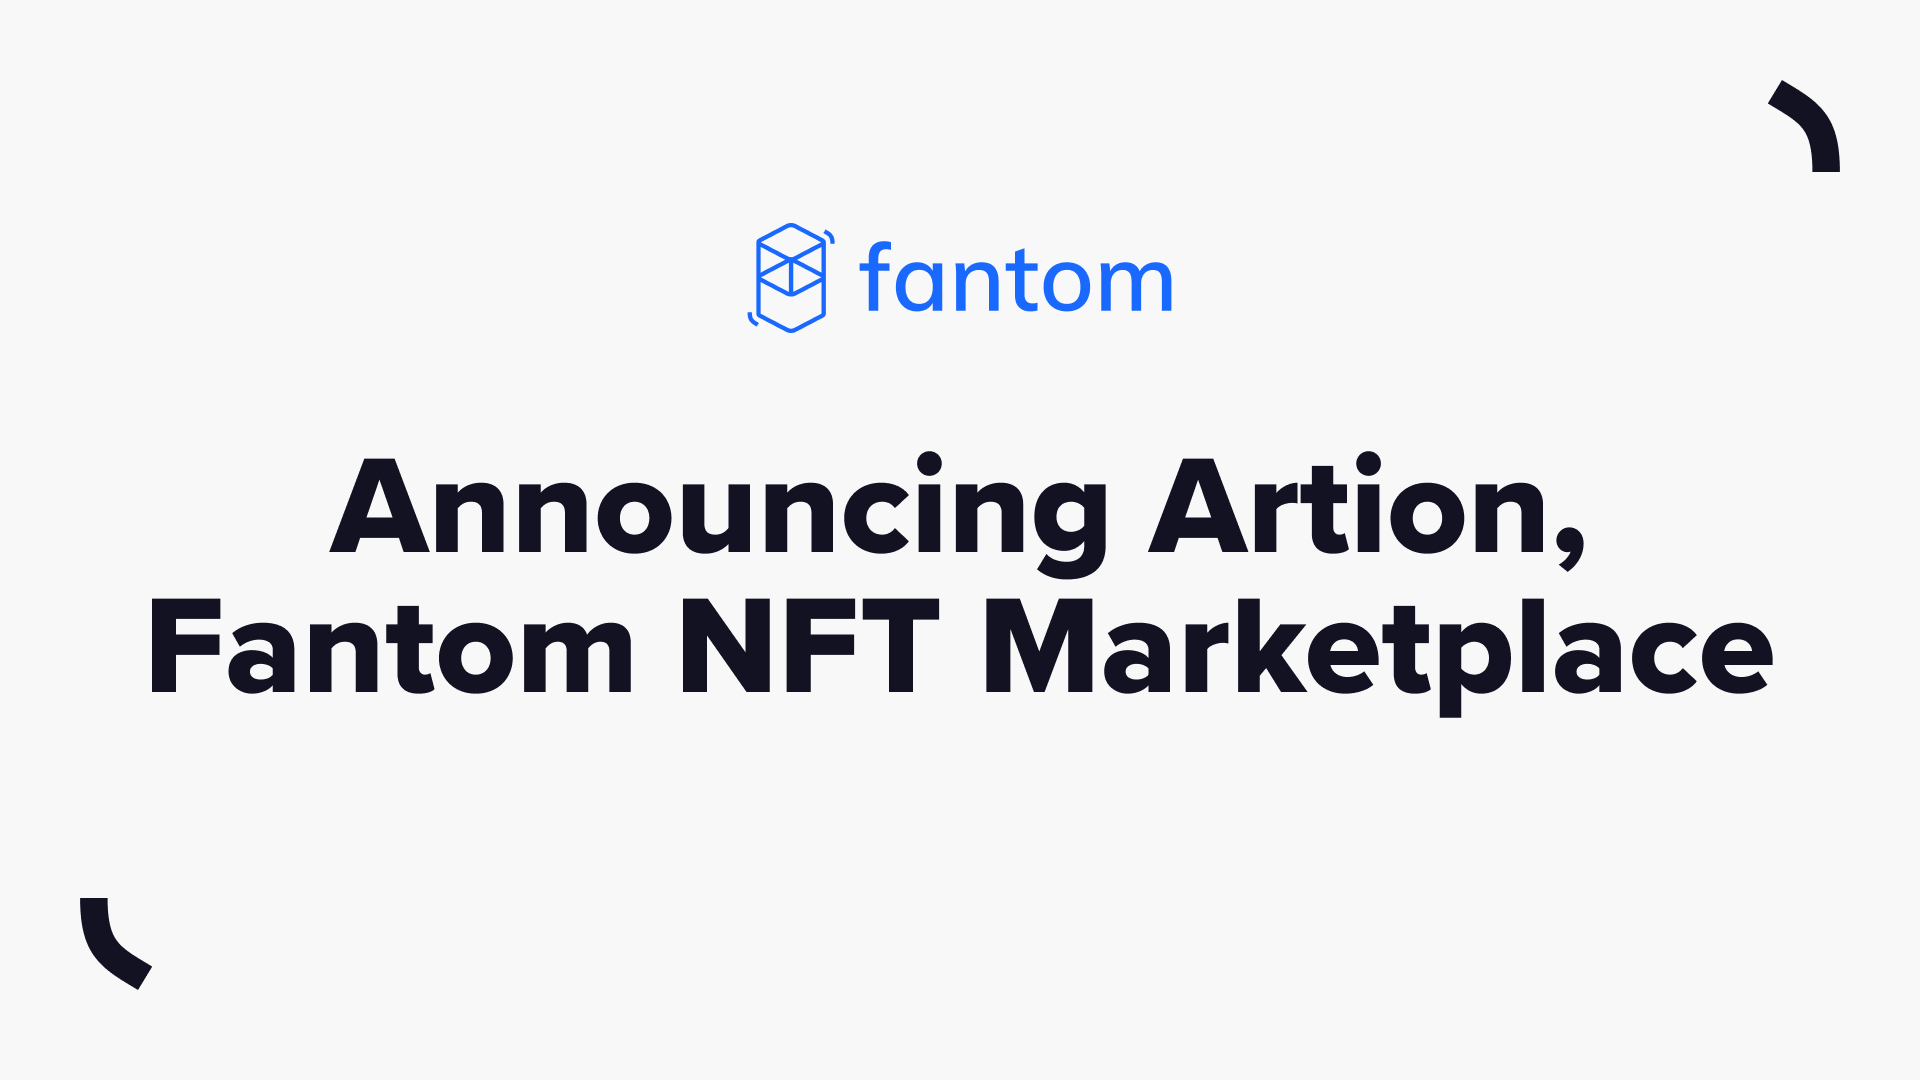 Announcing Artion, The Fantom NFT Marketplace